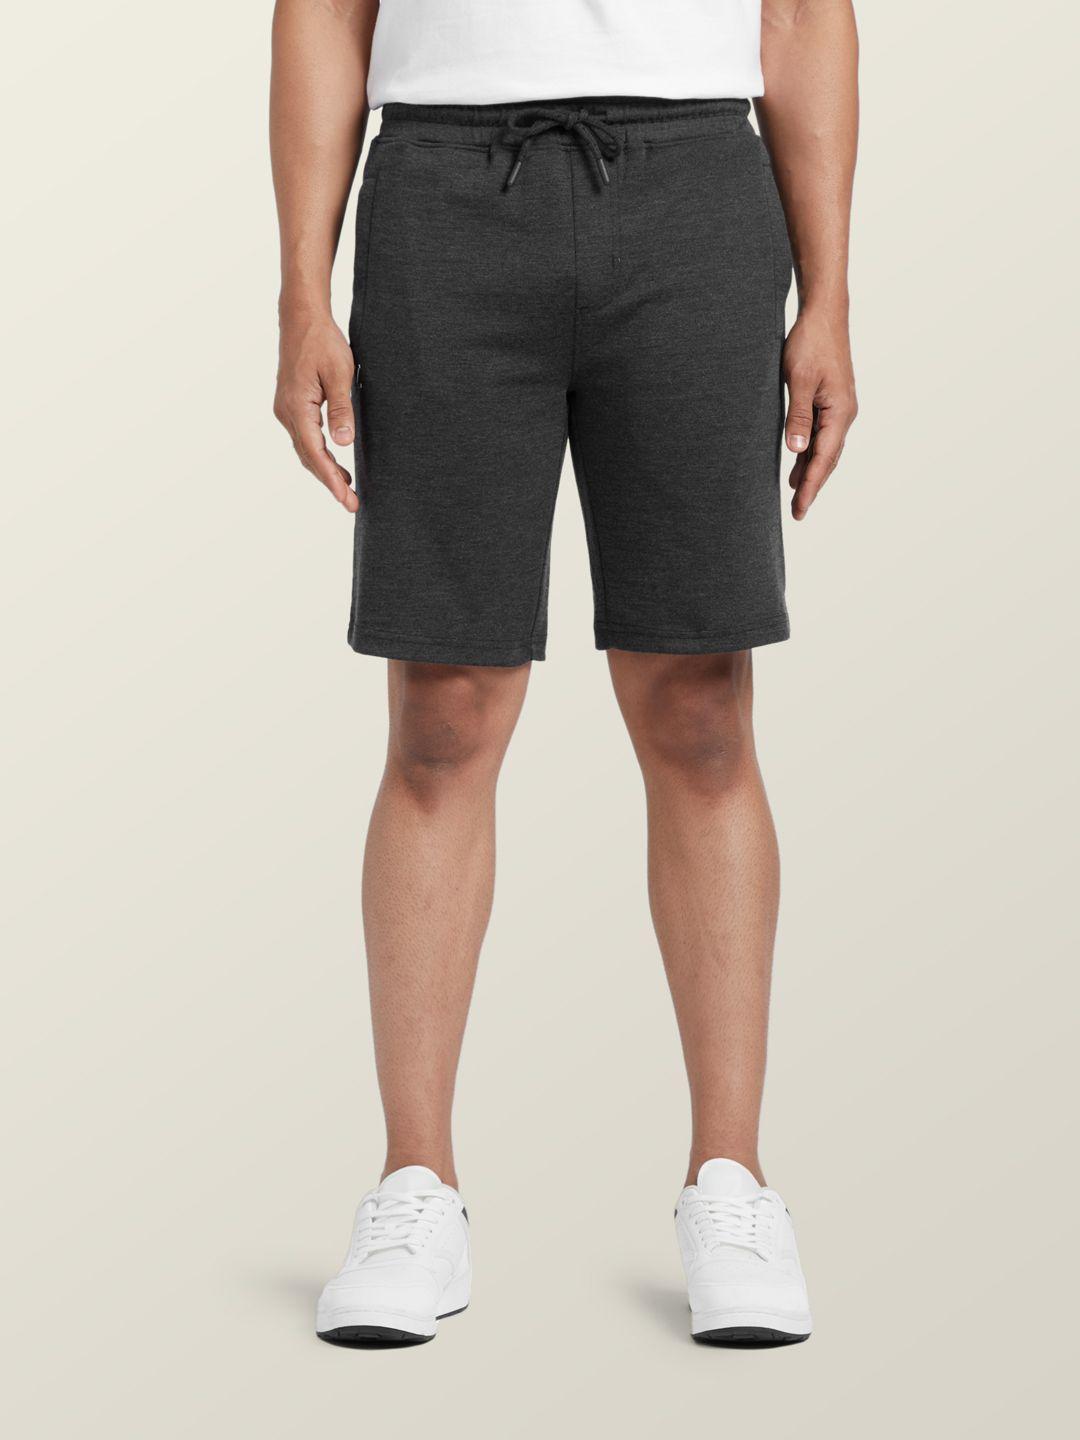 xyxx-men-grey-outdoor-sports-shorts